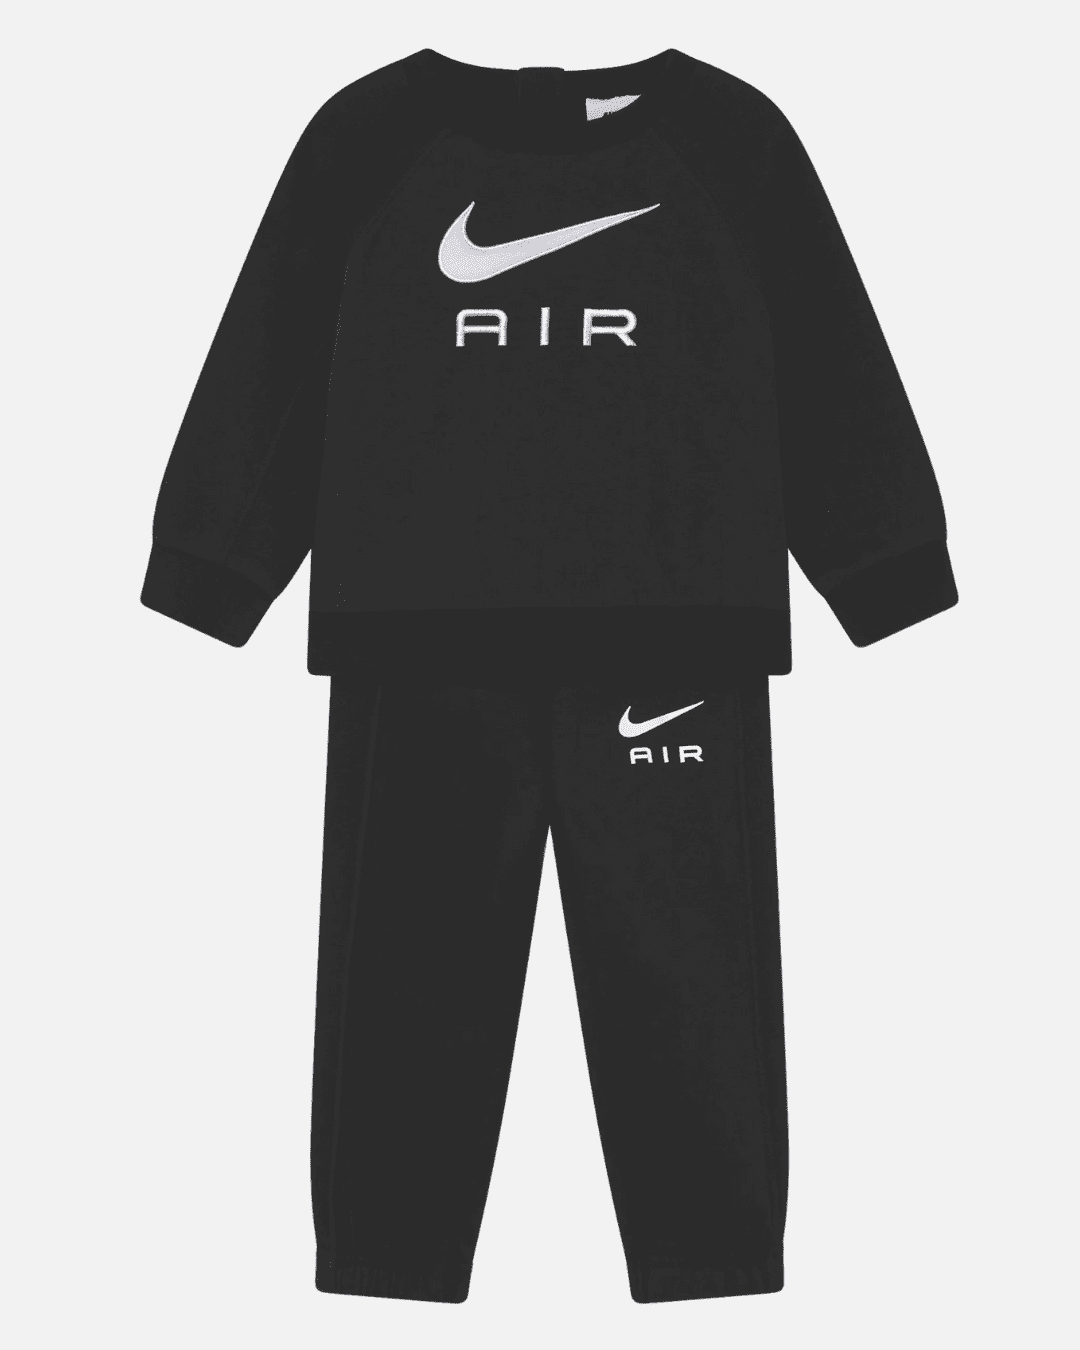 Nike Air Crew Baby Set - Black